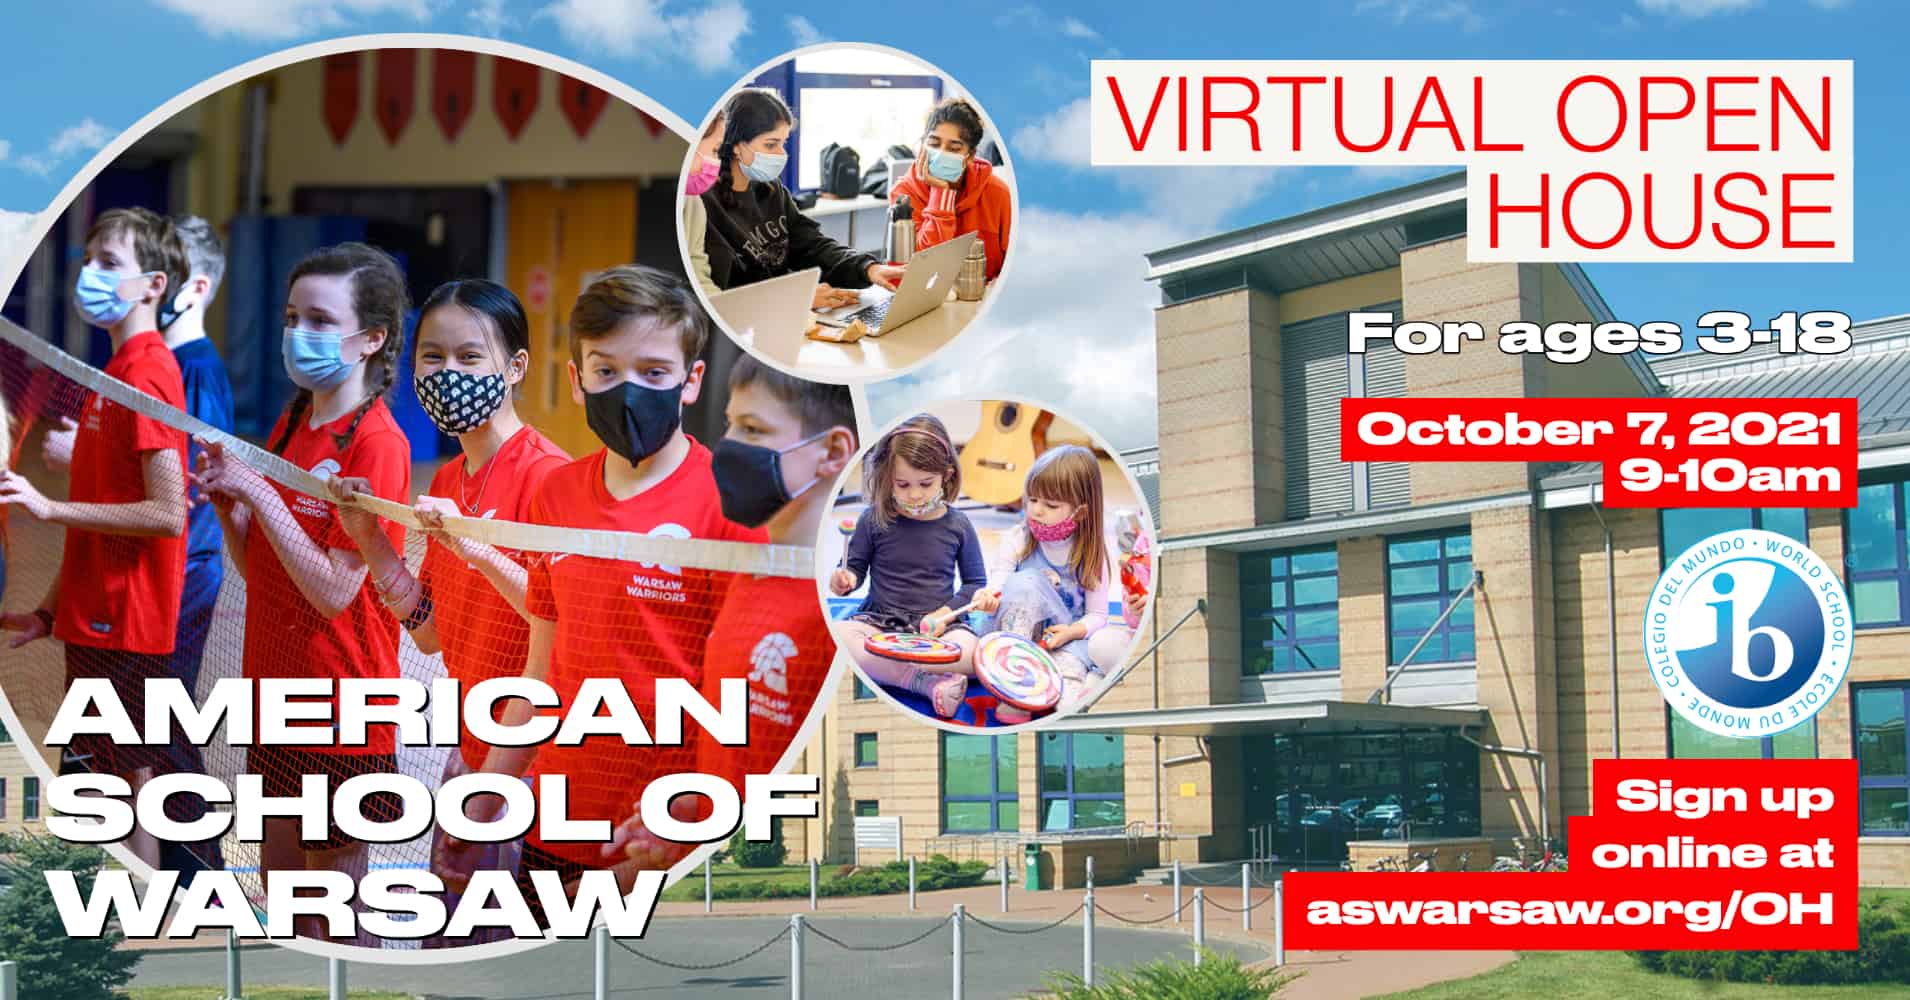 American School of Warsaw Virtual Open House